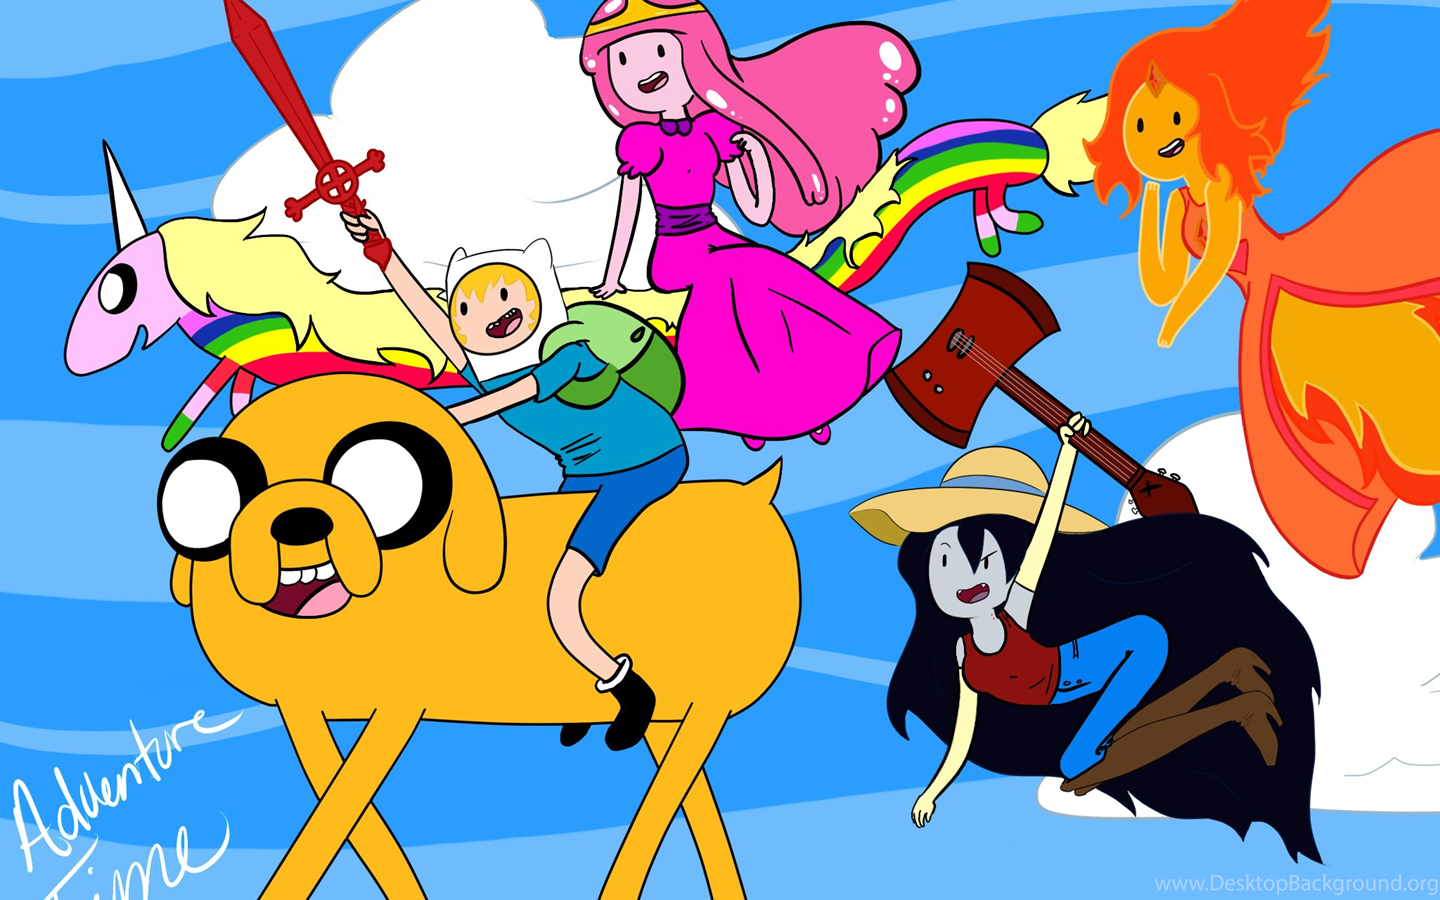 Adventure time with Finn & Jake. Время приключений 2010. Автор времени приключений